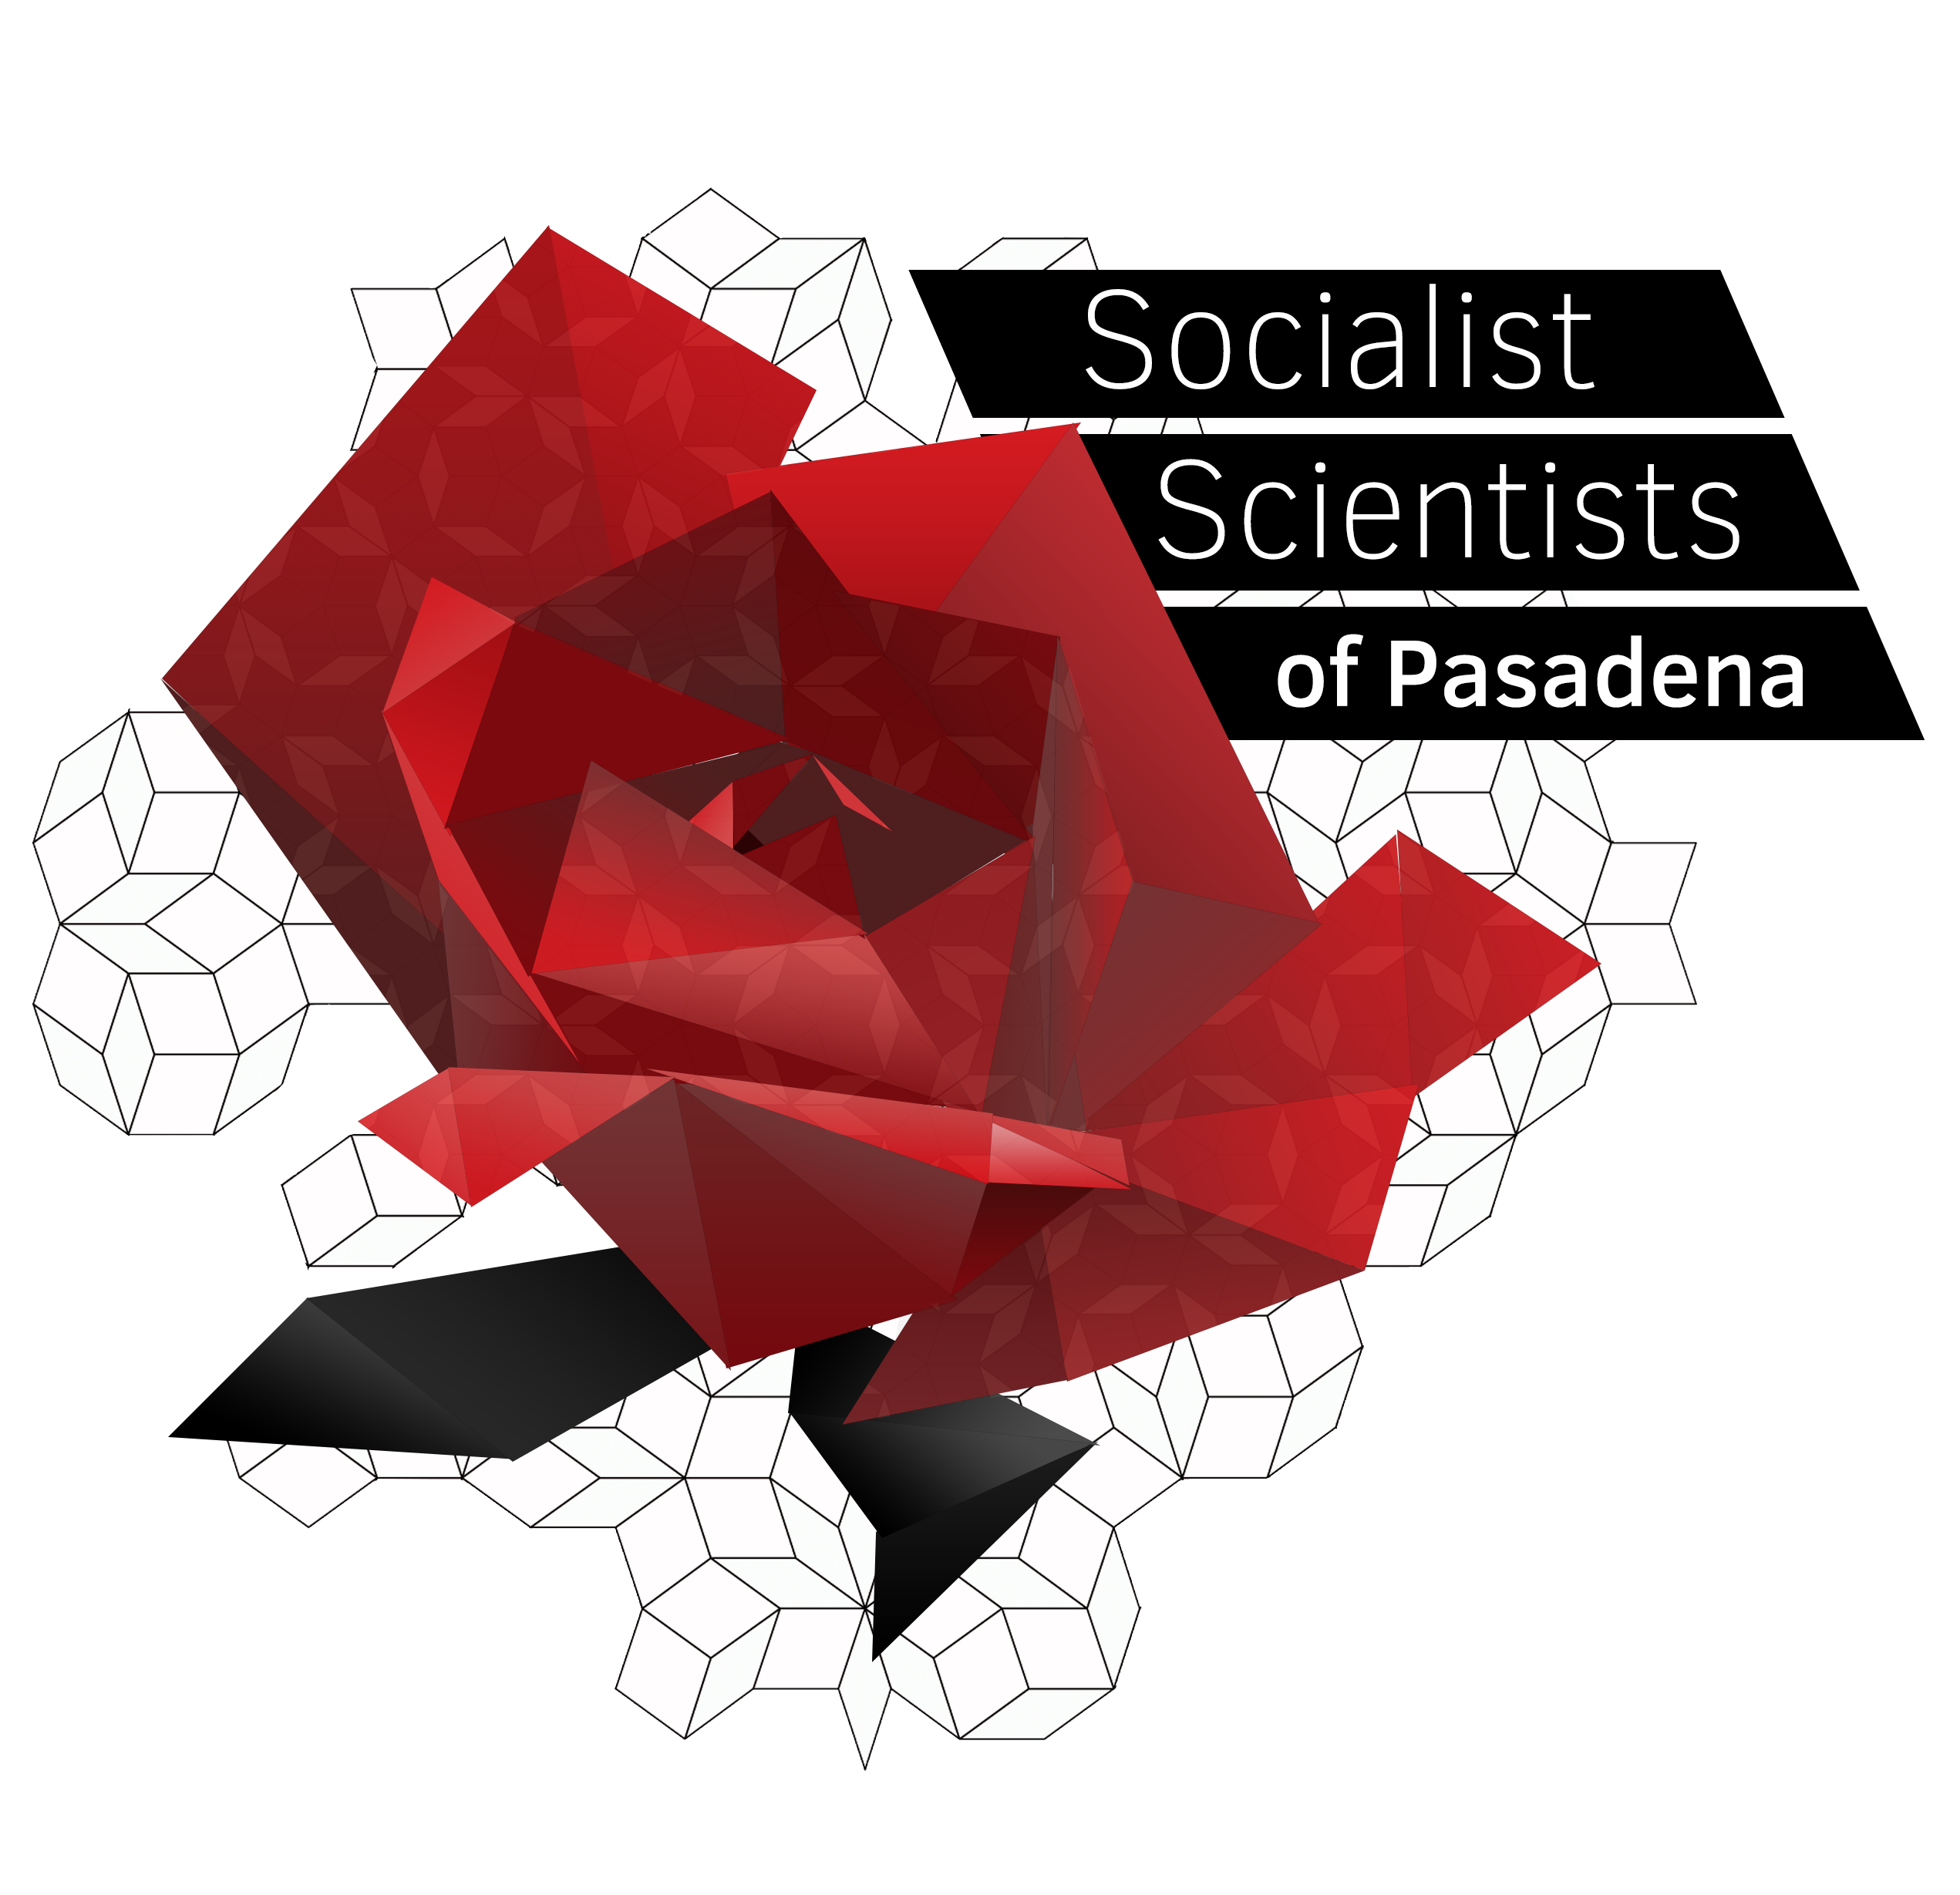 Socialist Scientists of Pasadena logo